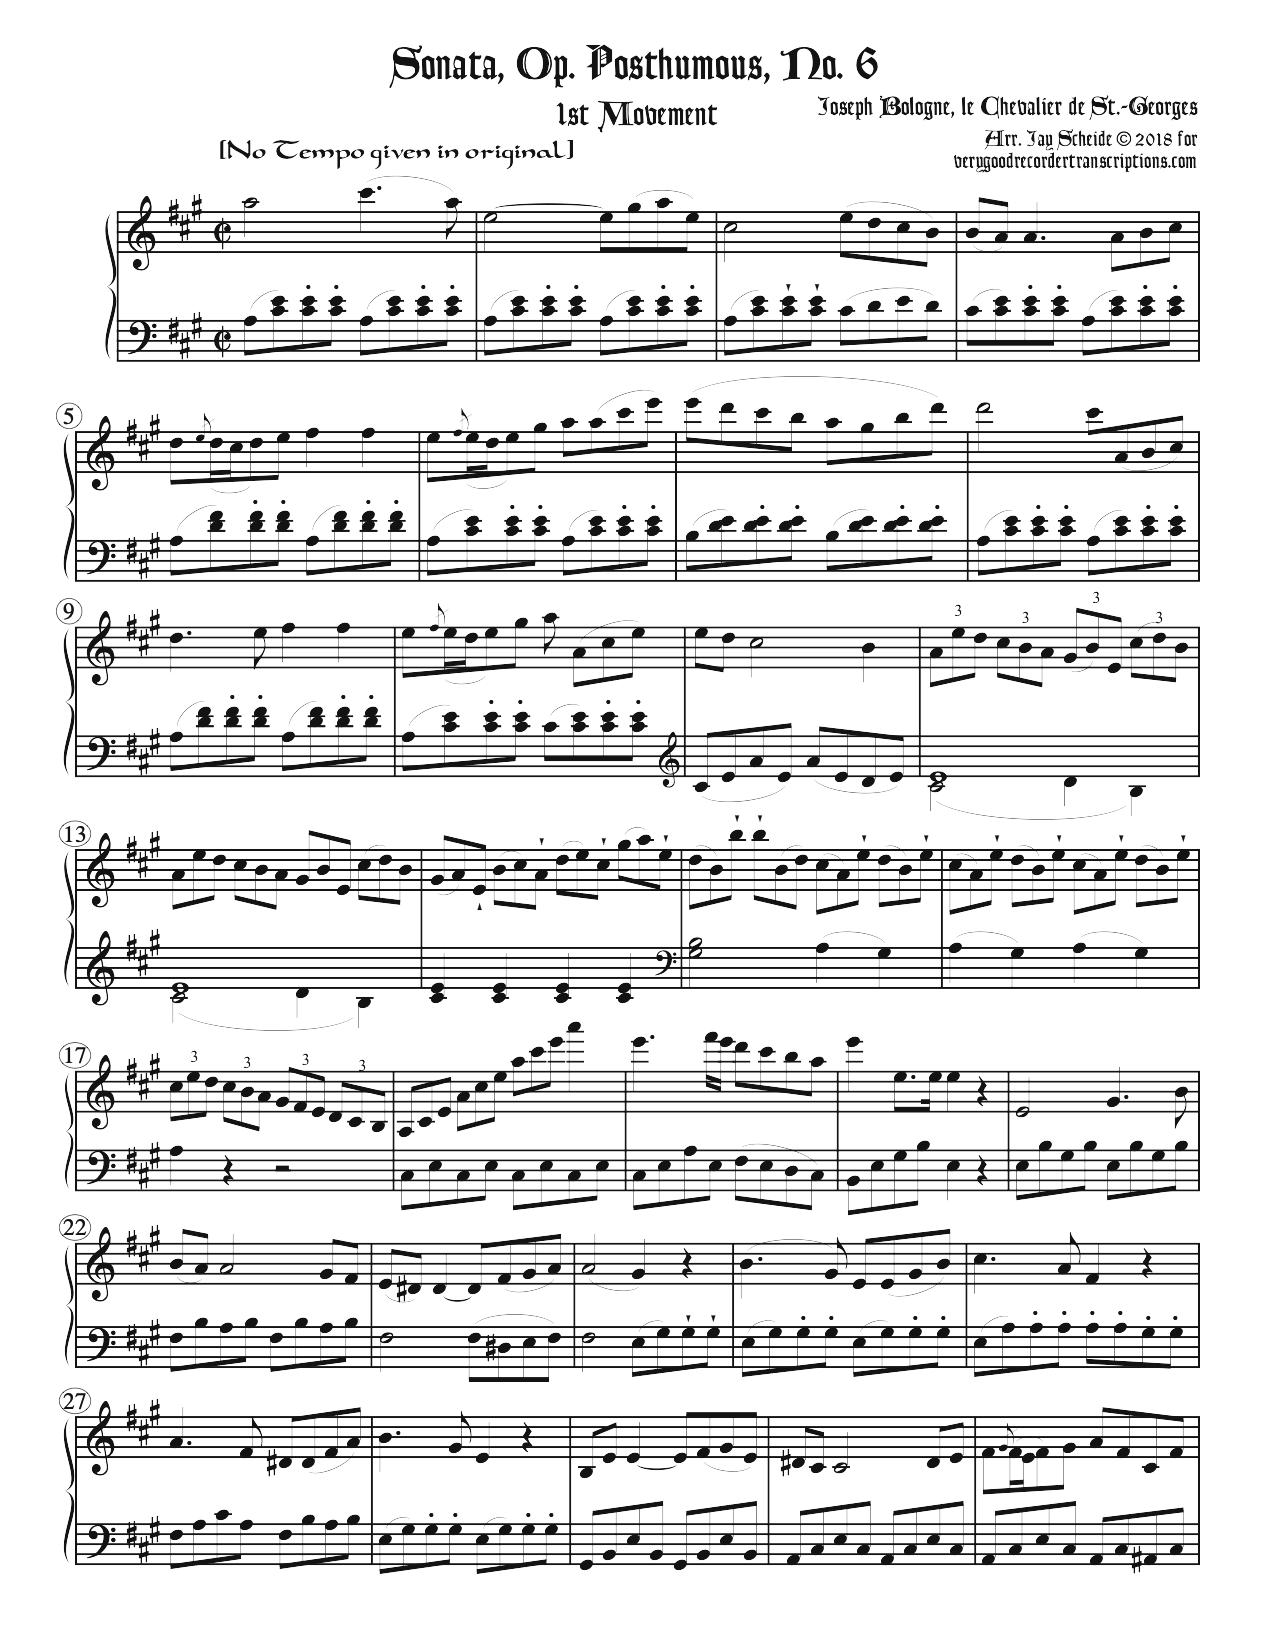 Duet Sonata Op. Posthumous No. 6